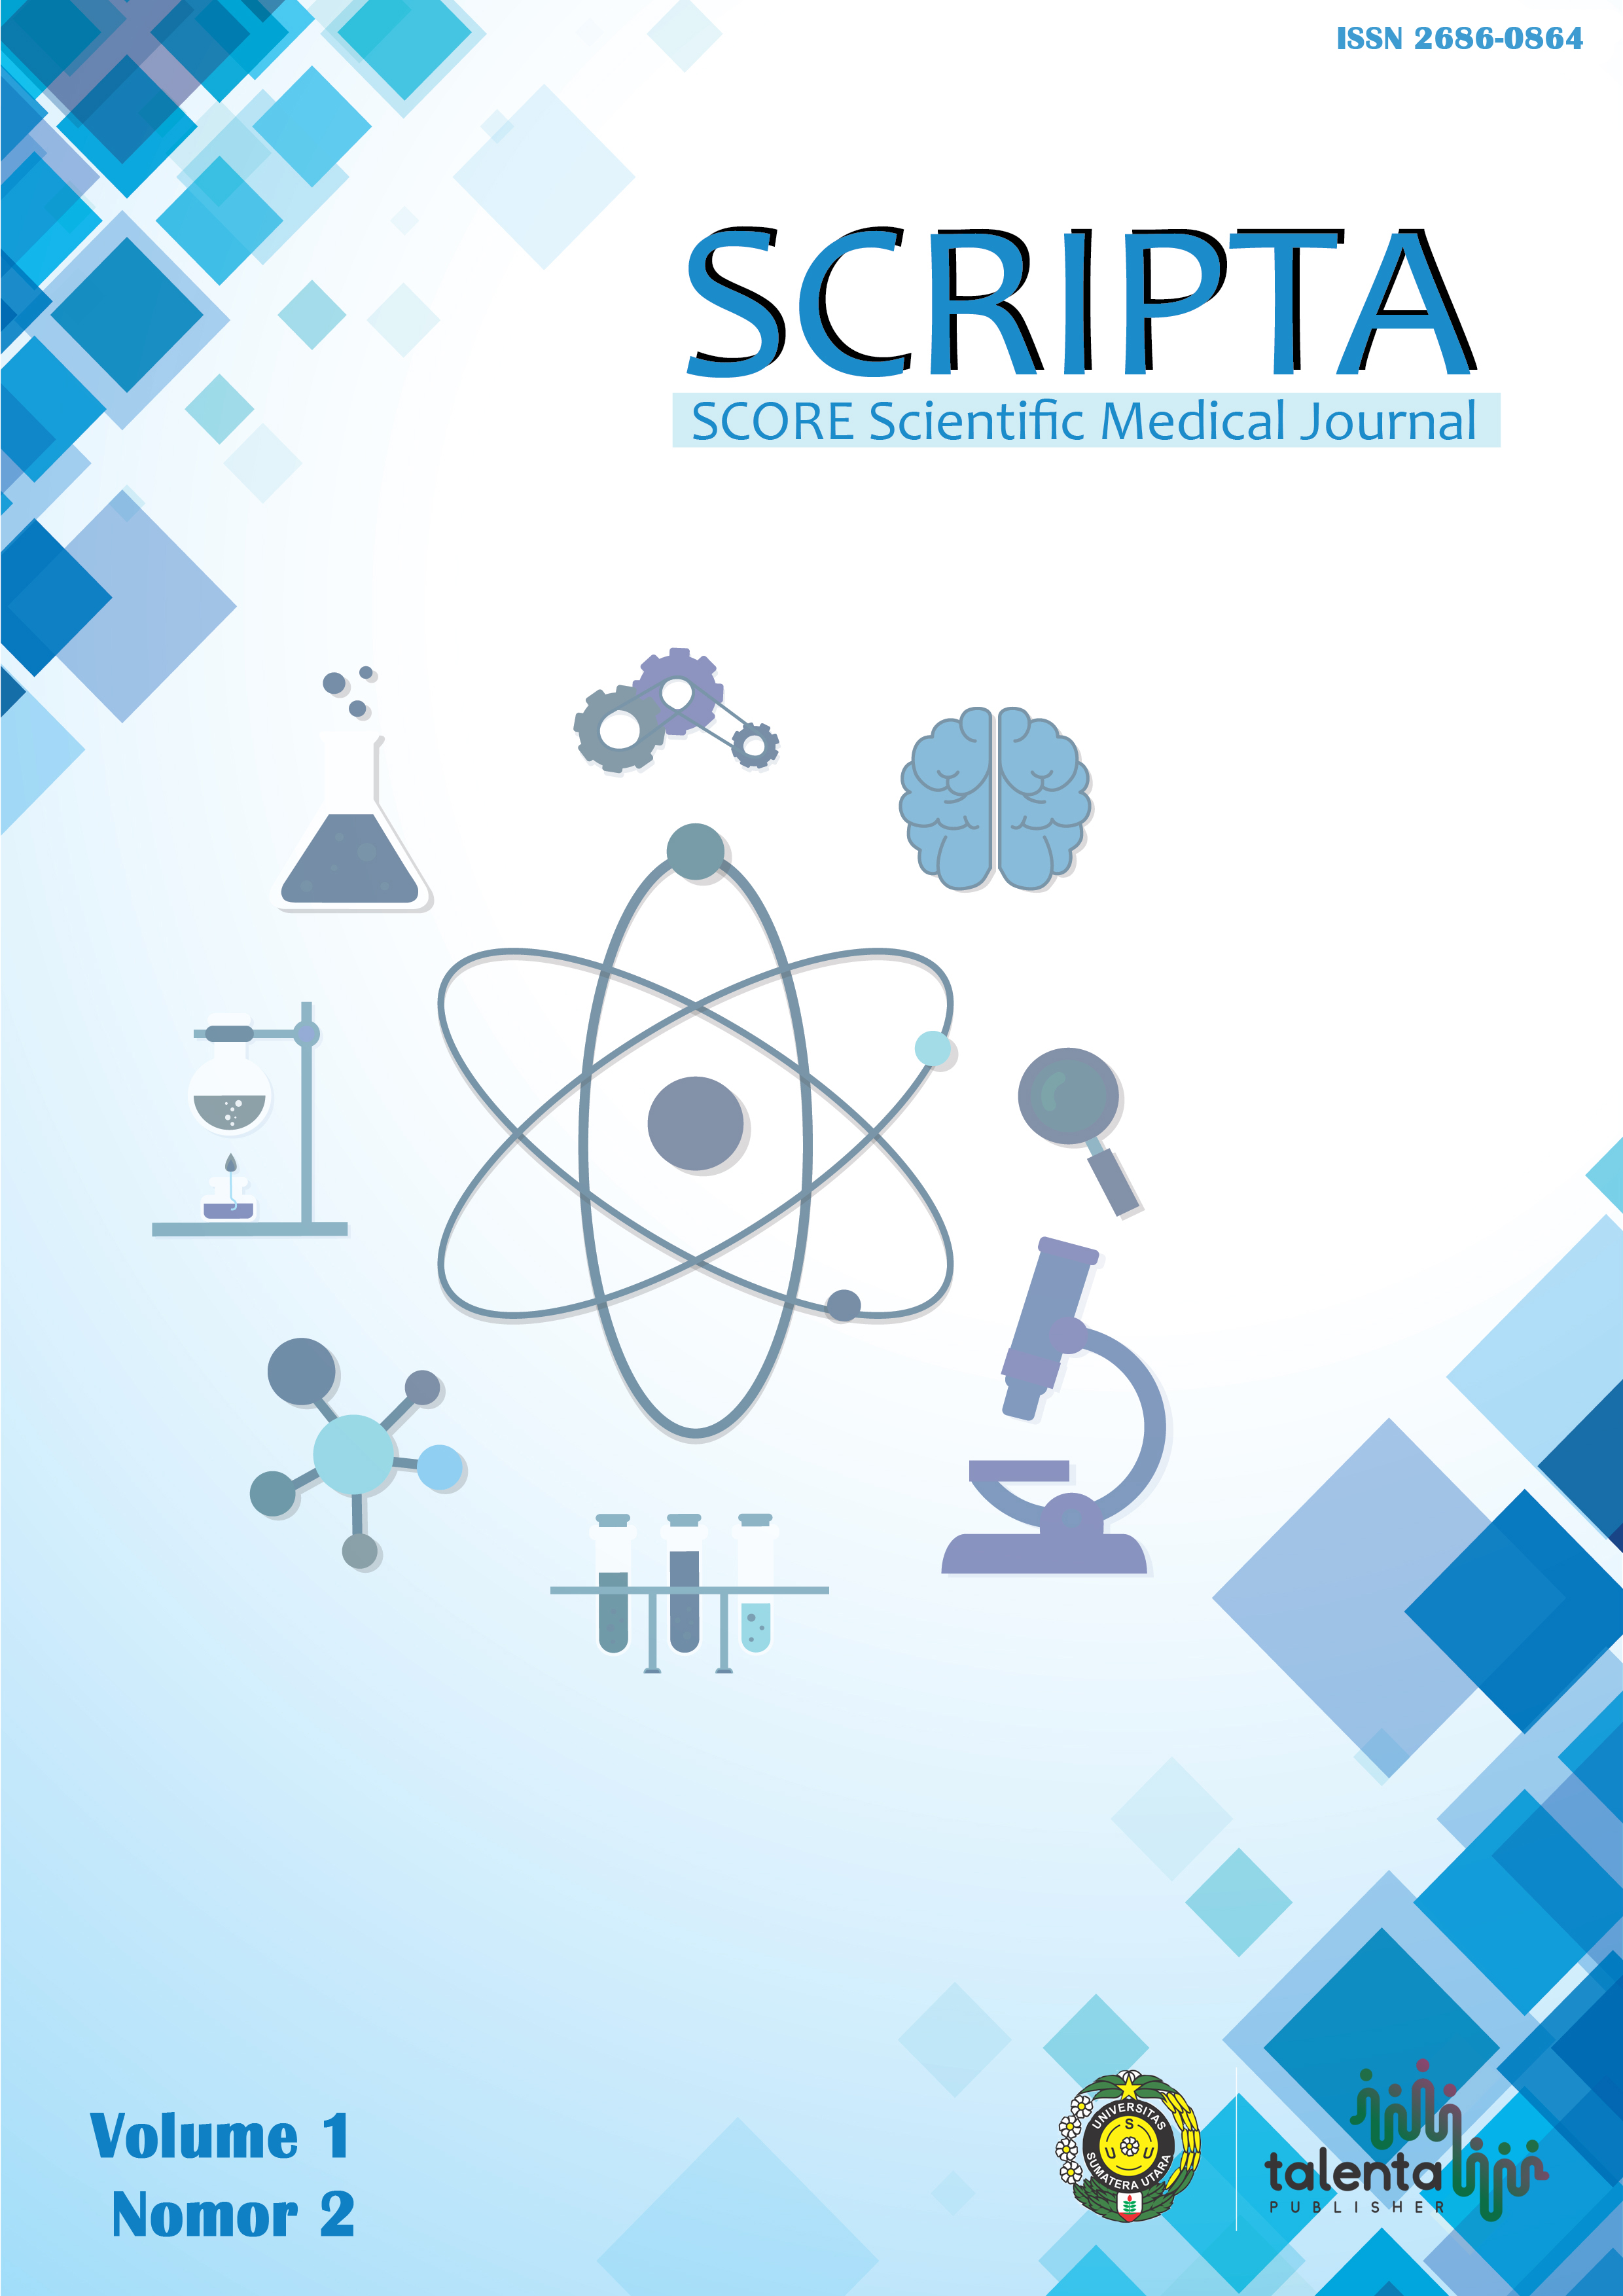 Cover of SCRIPTA SCORE Scientific Medical Journal for Volume 1 Number 2 at April 2020